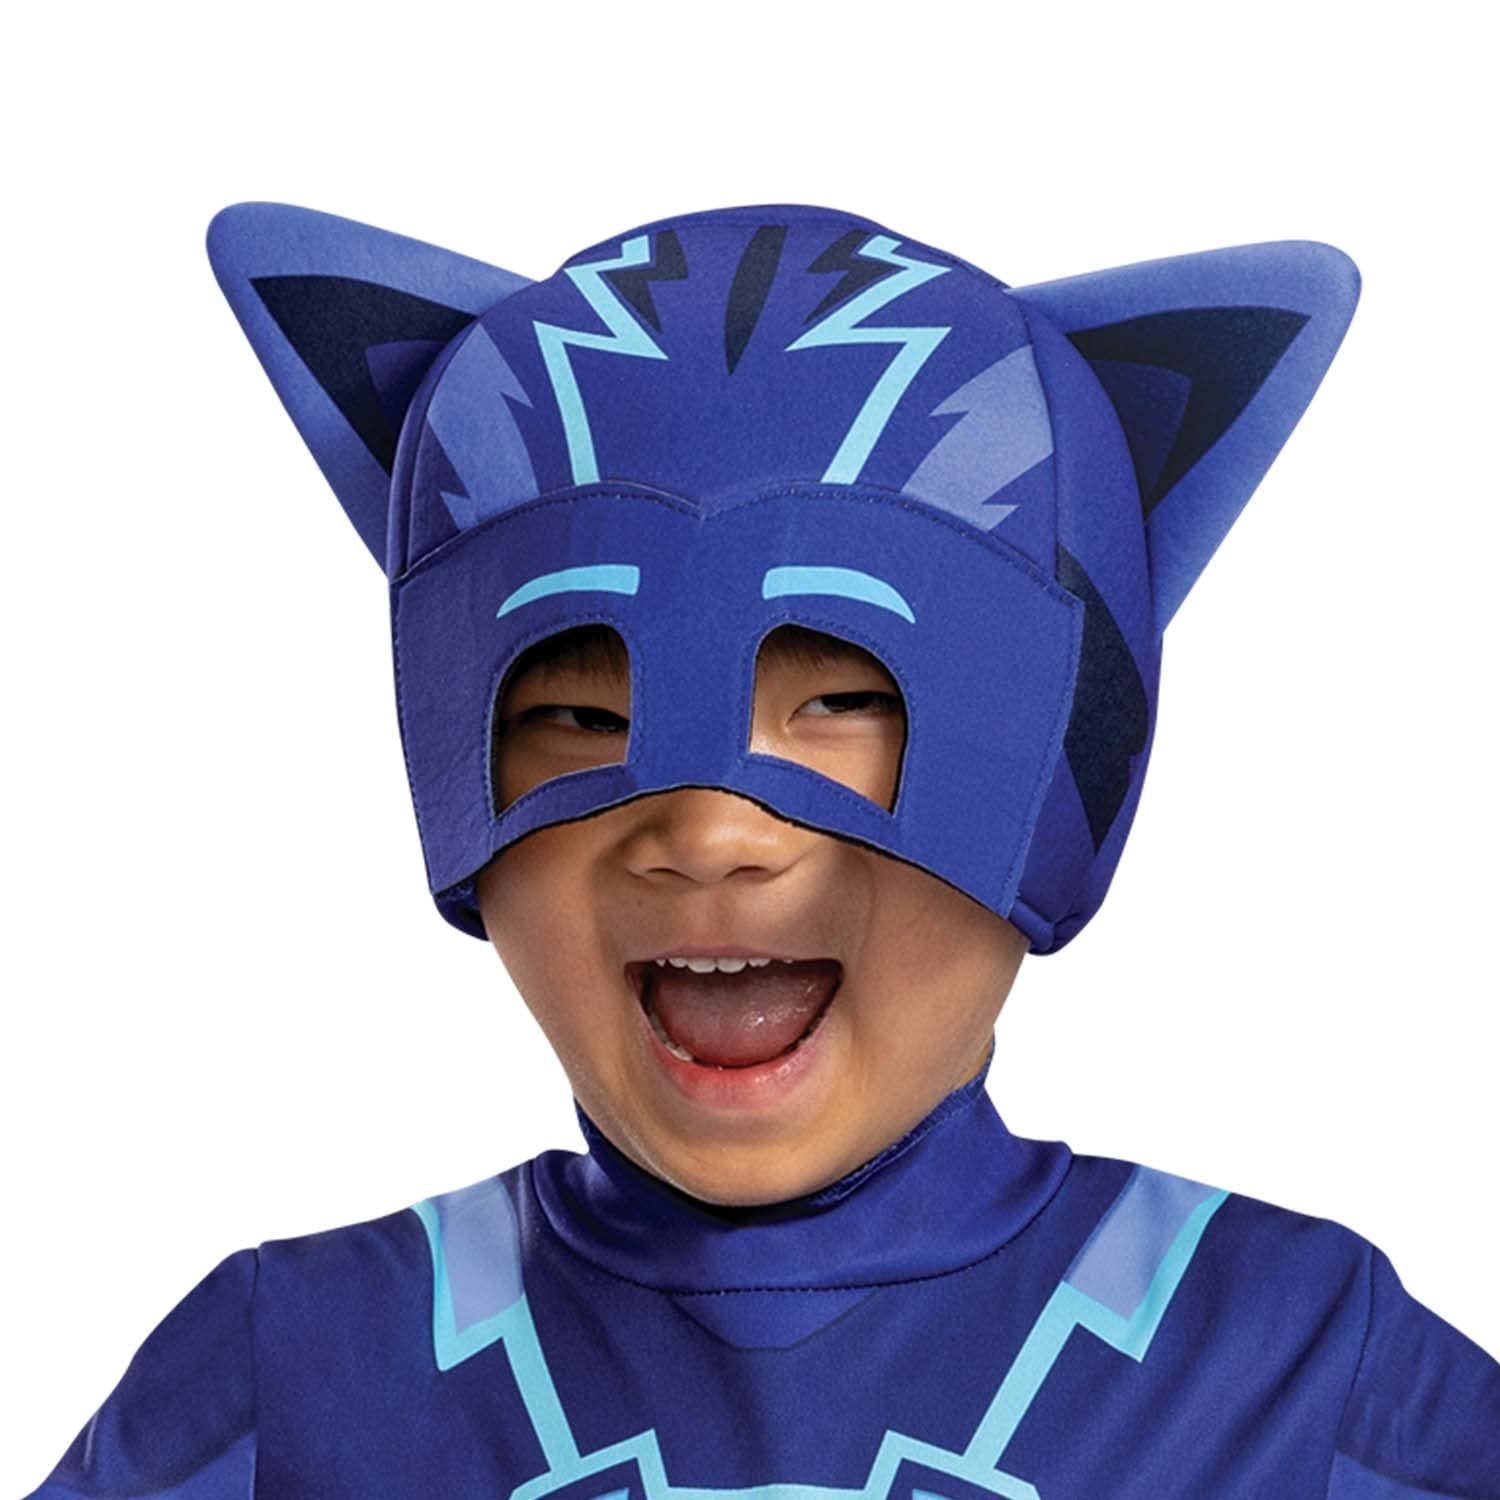 Disguise Catboy Costume for Kids, Official PJ Masks Megasuit Costume Jumpsuit and Mask, Toddler Size Medium (3T-4T)